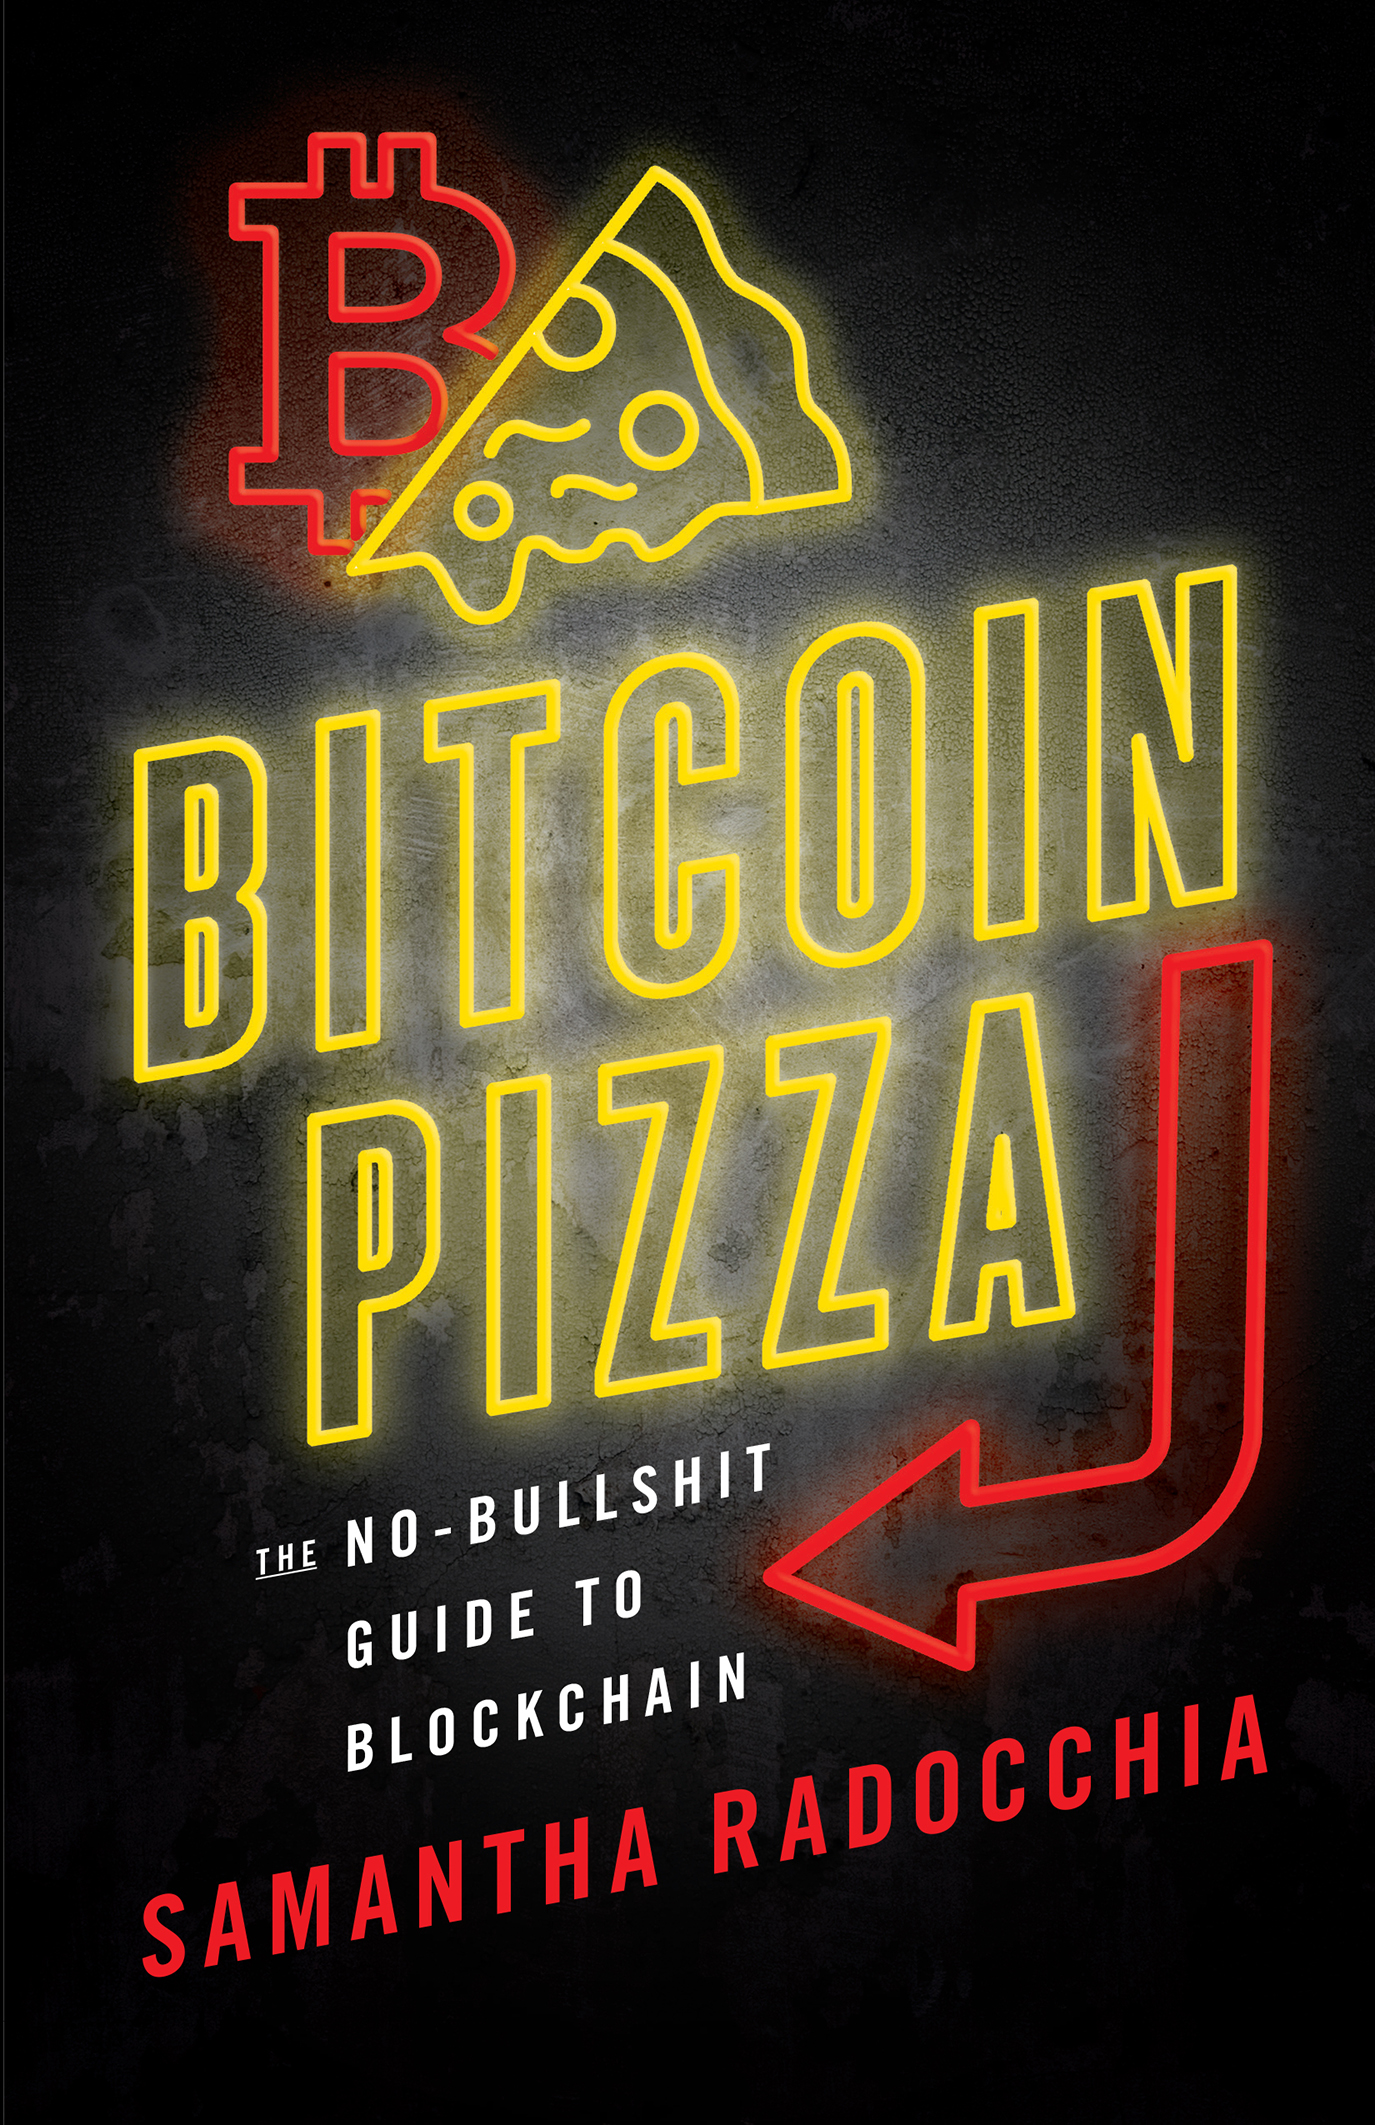 Bitcoin Pizza Book Cover Image Bitcoin Pizza: The No-Bullshit Guide to Blockchain